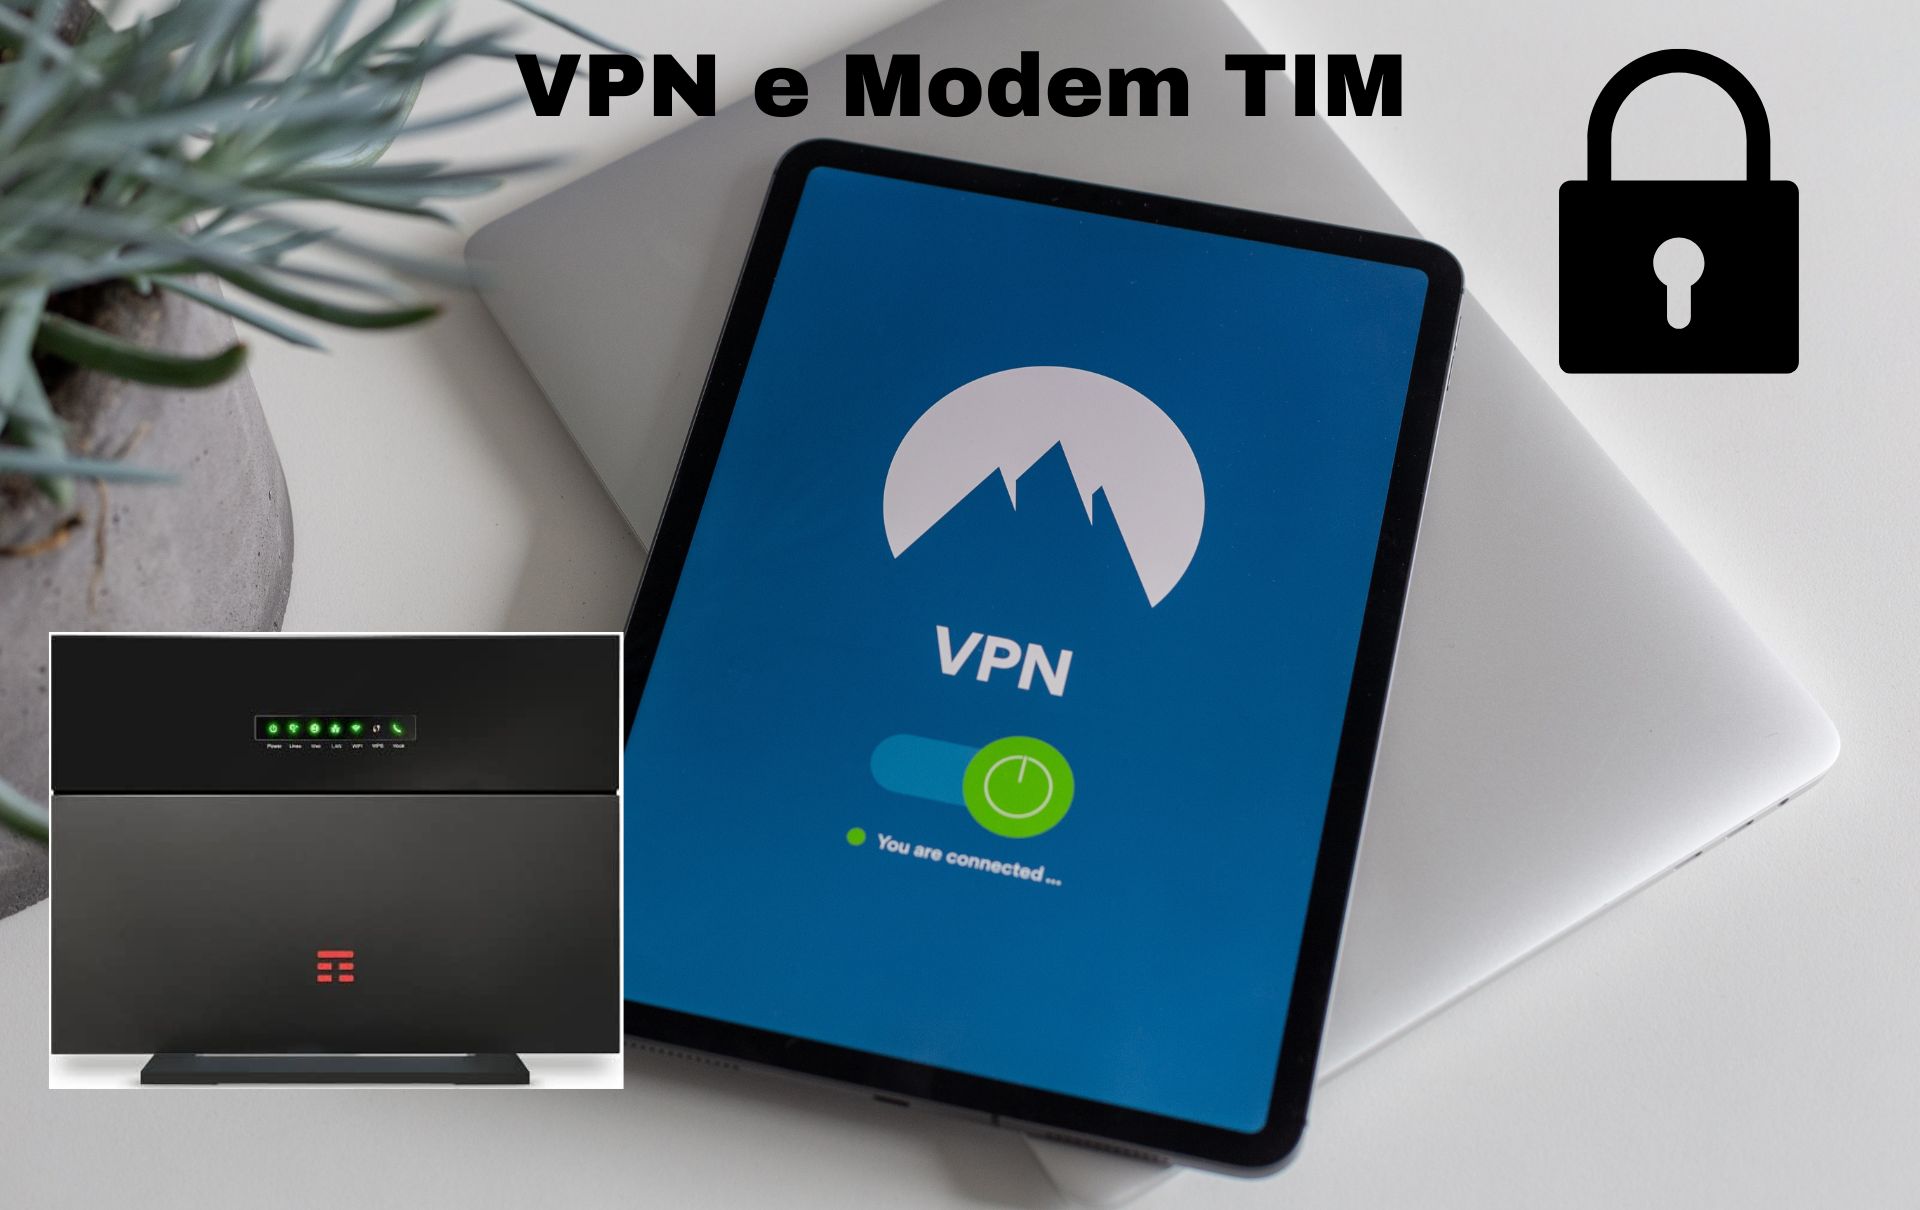 Modem TIM Sicuro: Le Migliori VPN per una Navigazione Protetta